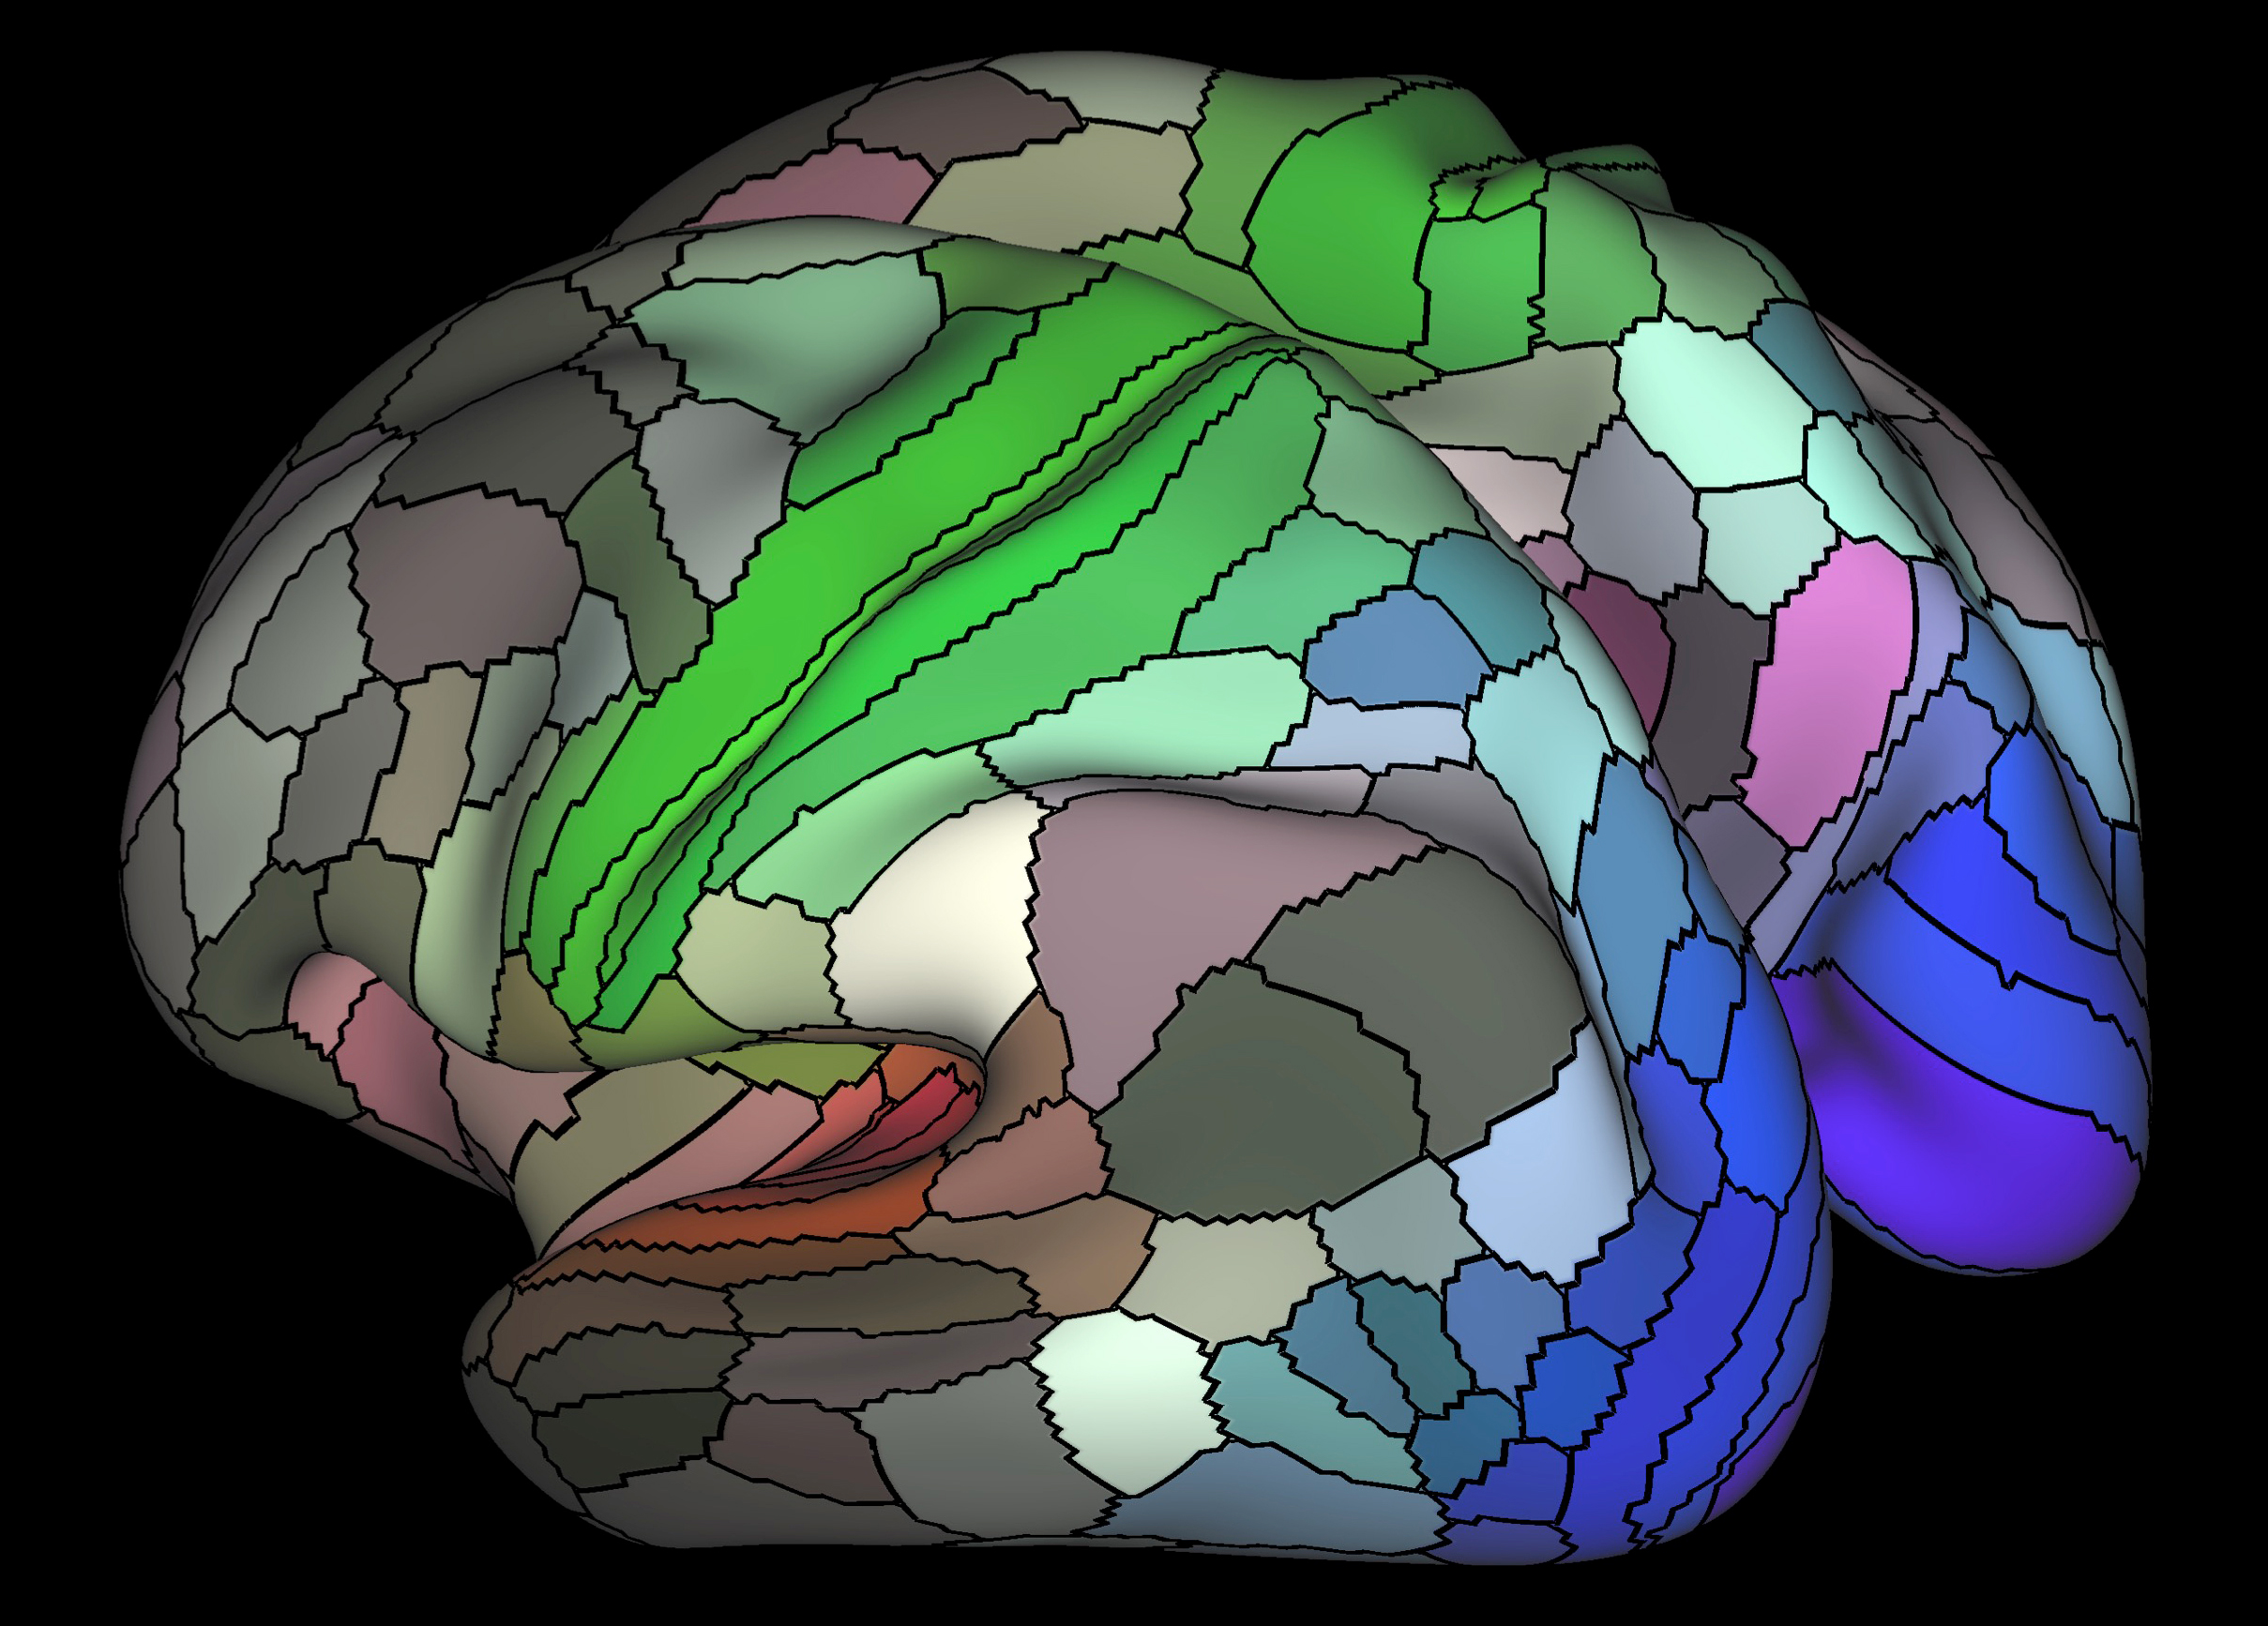 human brain mapping publication fees